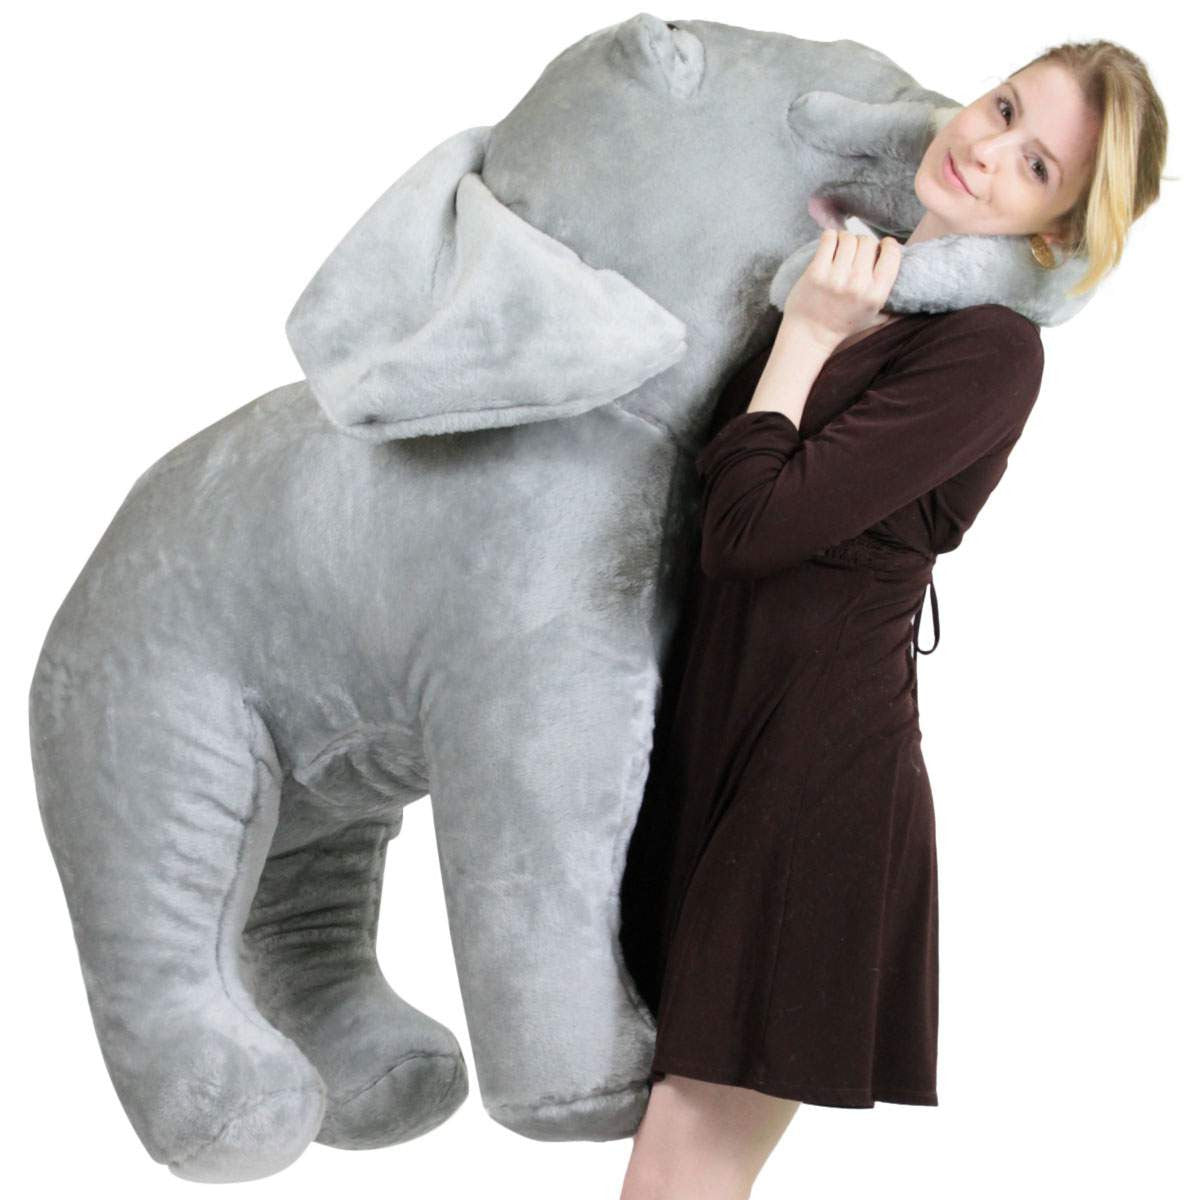 American Made Giant Stuffed Elephant 48 Inch Soft Big Plush Realistic